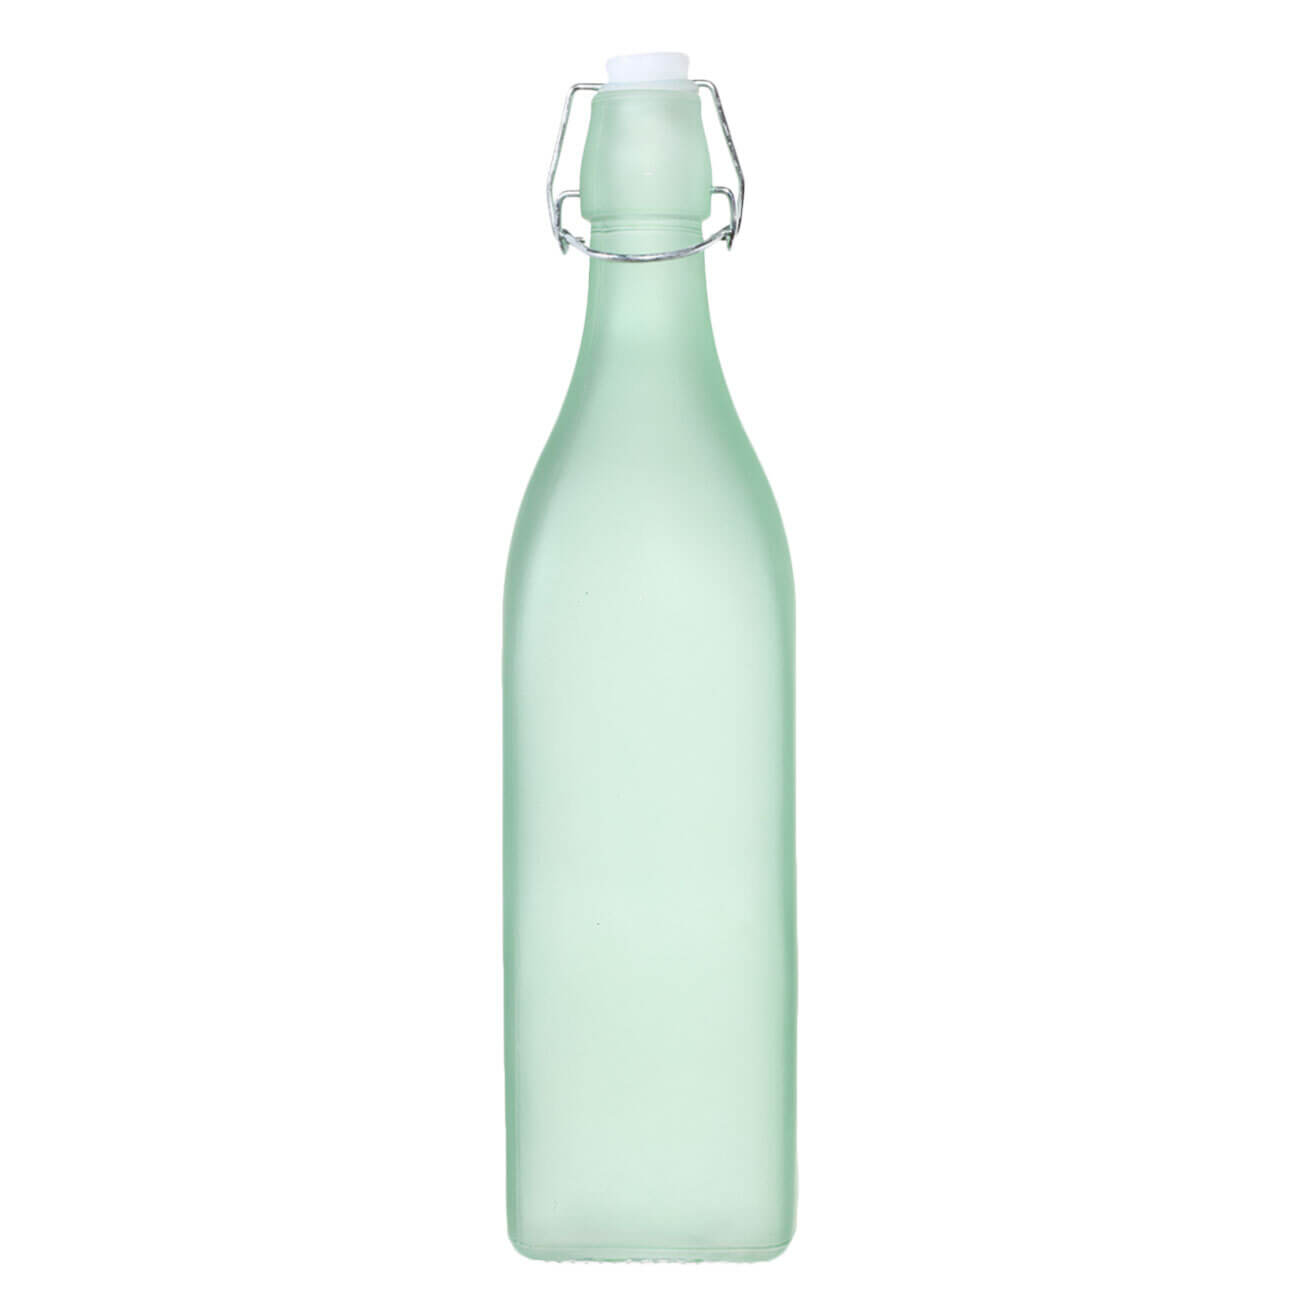 Бутылка для масла или уксуса, 1 л, с клипсой, стекло/металл, зеленая, Light kitchen распылитель для масла и уксуса mallony oliva 100 мл 100132